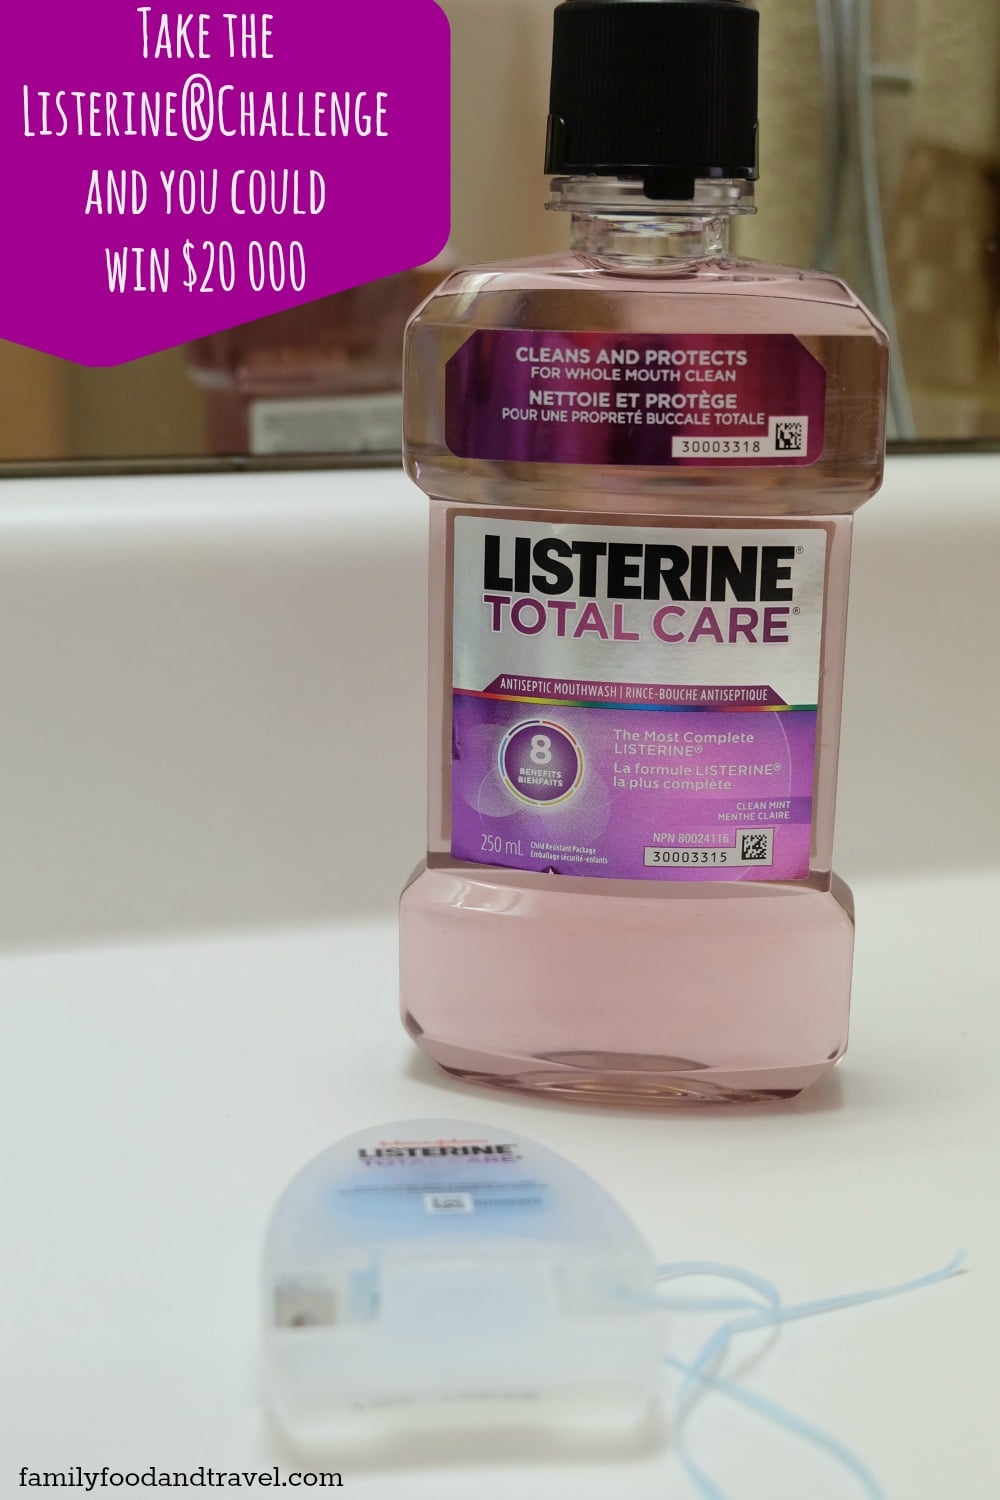 Listerine Challenge